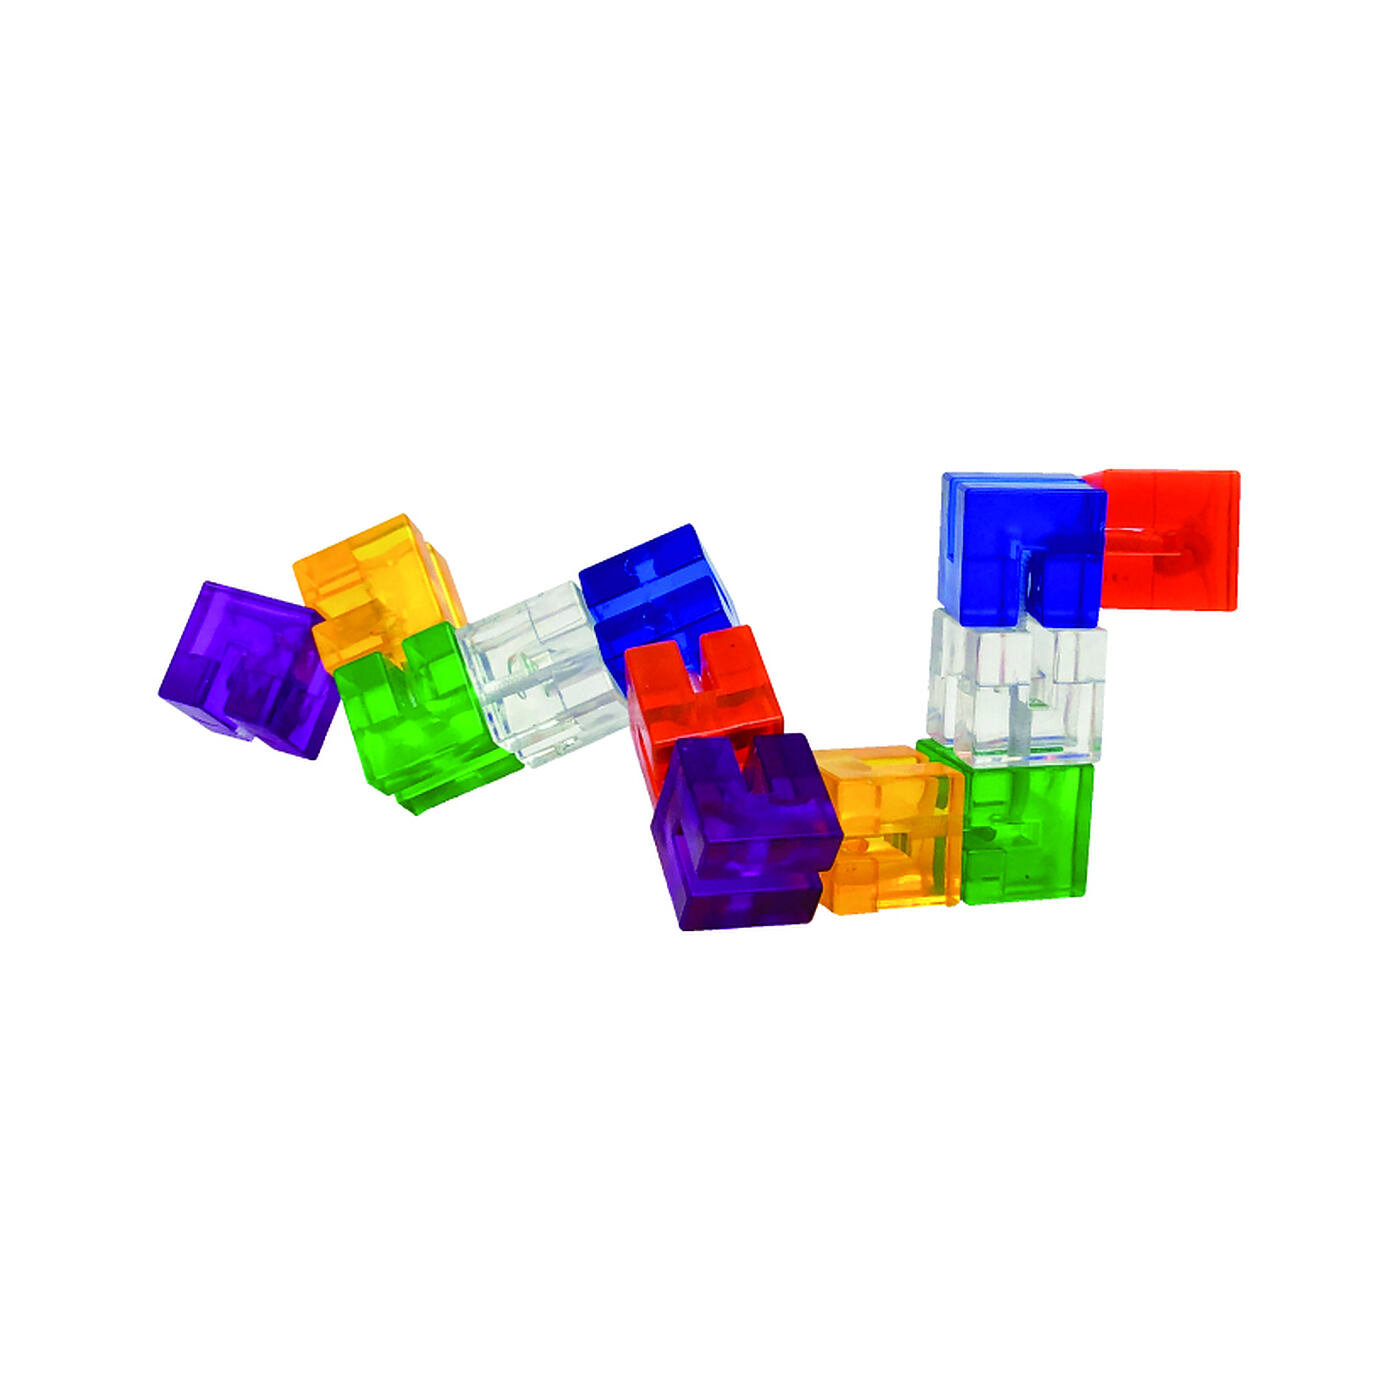 Puzzle mecanic - Flex Puzzler Crystal | Huch